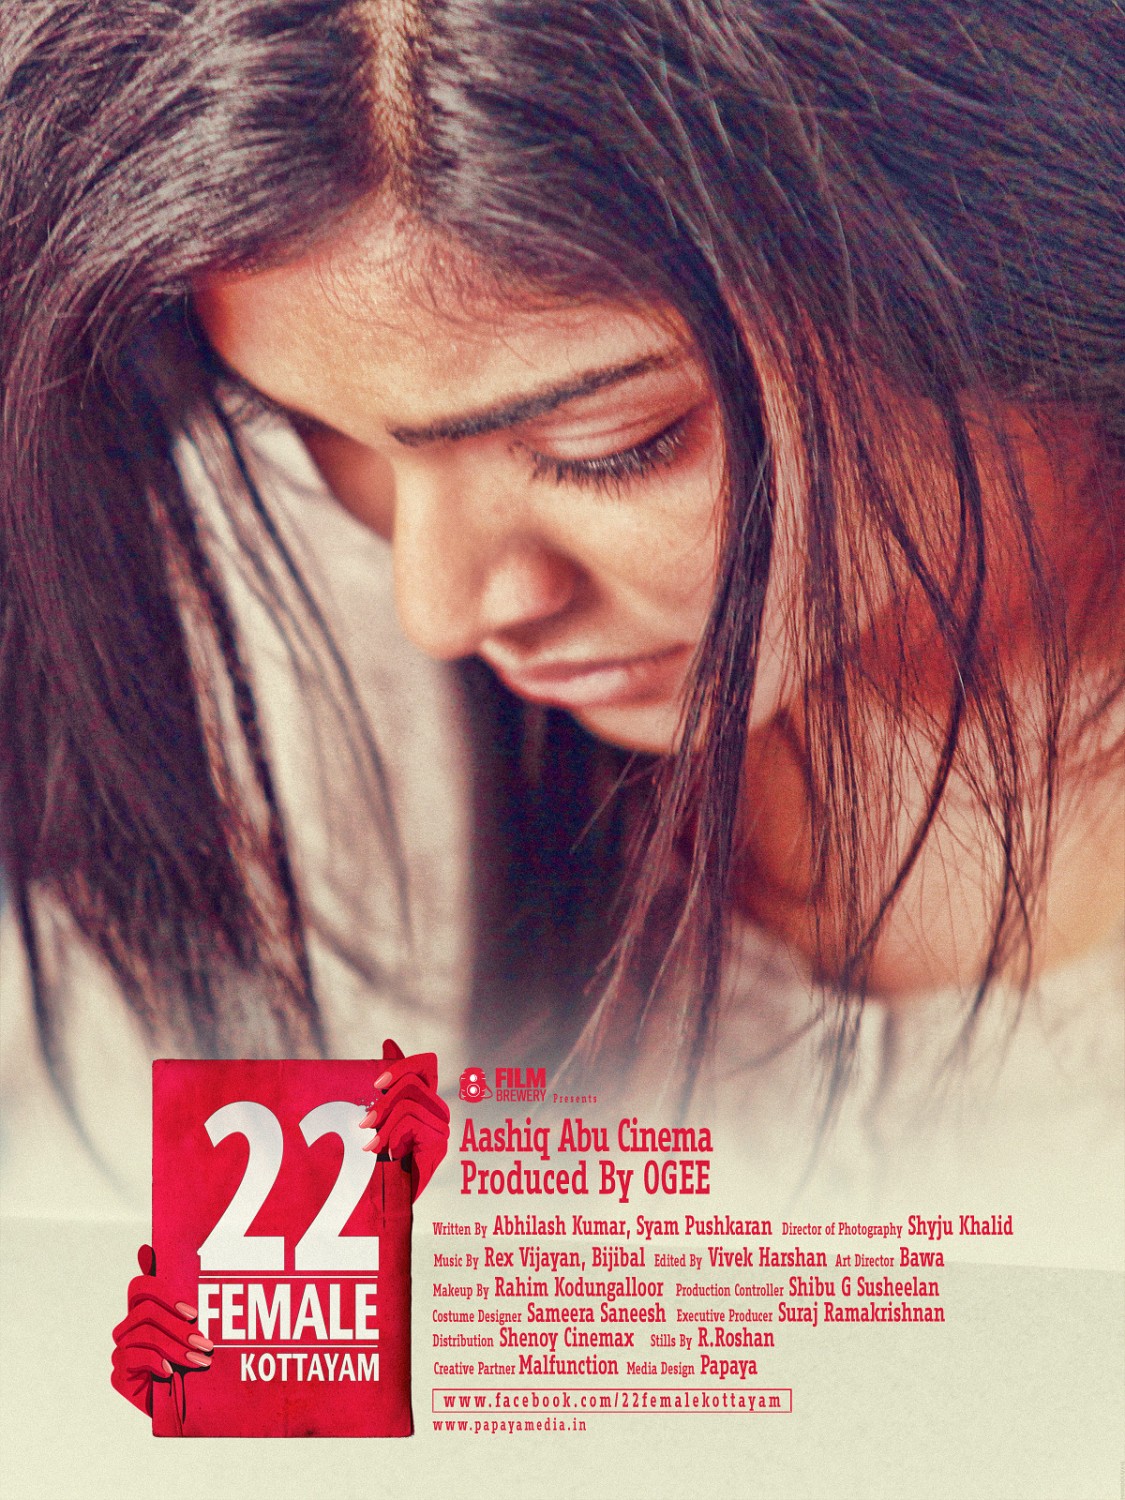 Extra Large Movie Poster Image for 22 Female Kottayam (#23 of 28)